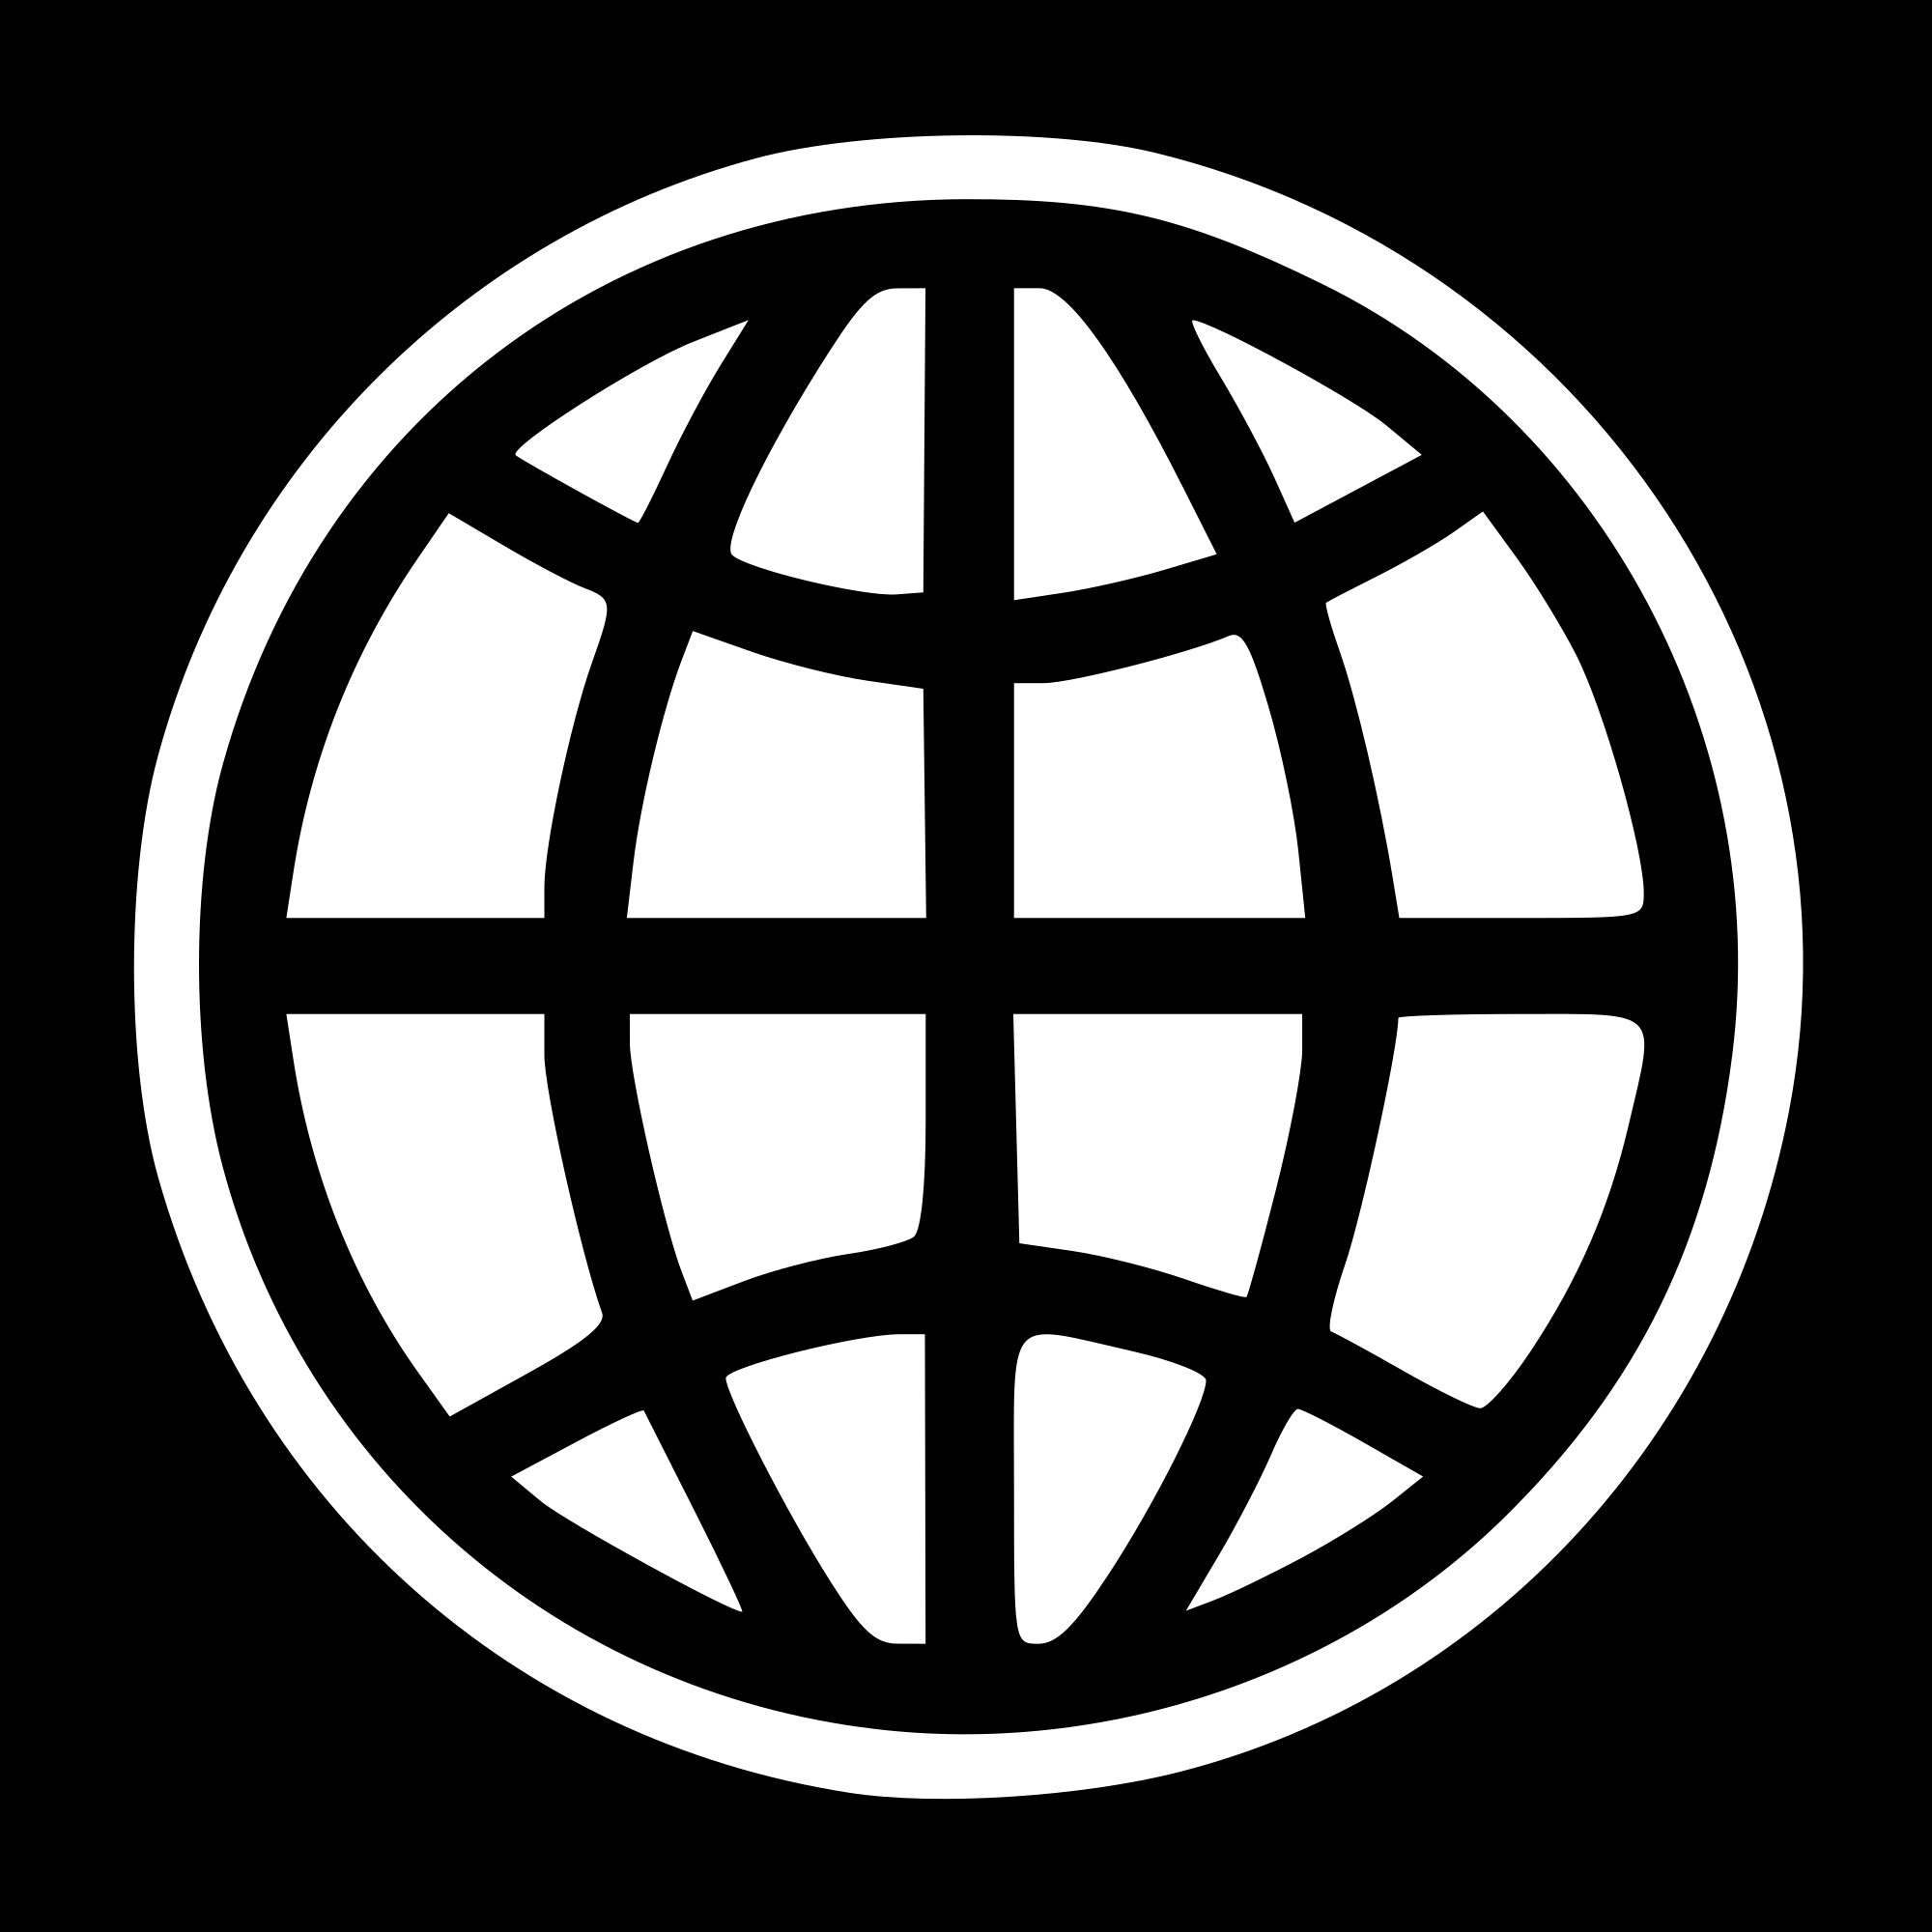 World Bank Logo - File:World Bank logo.svg - Wikimedia Commons